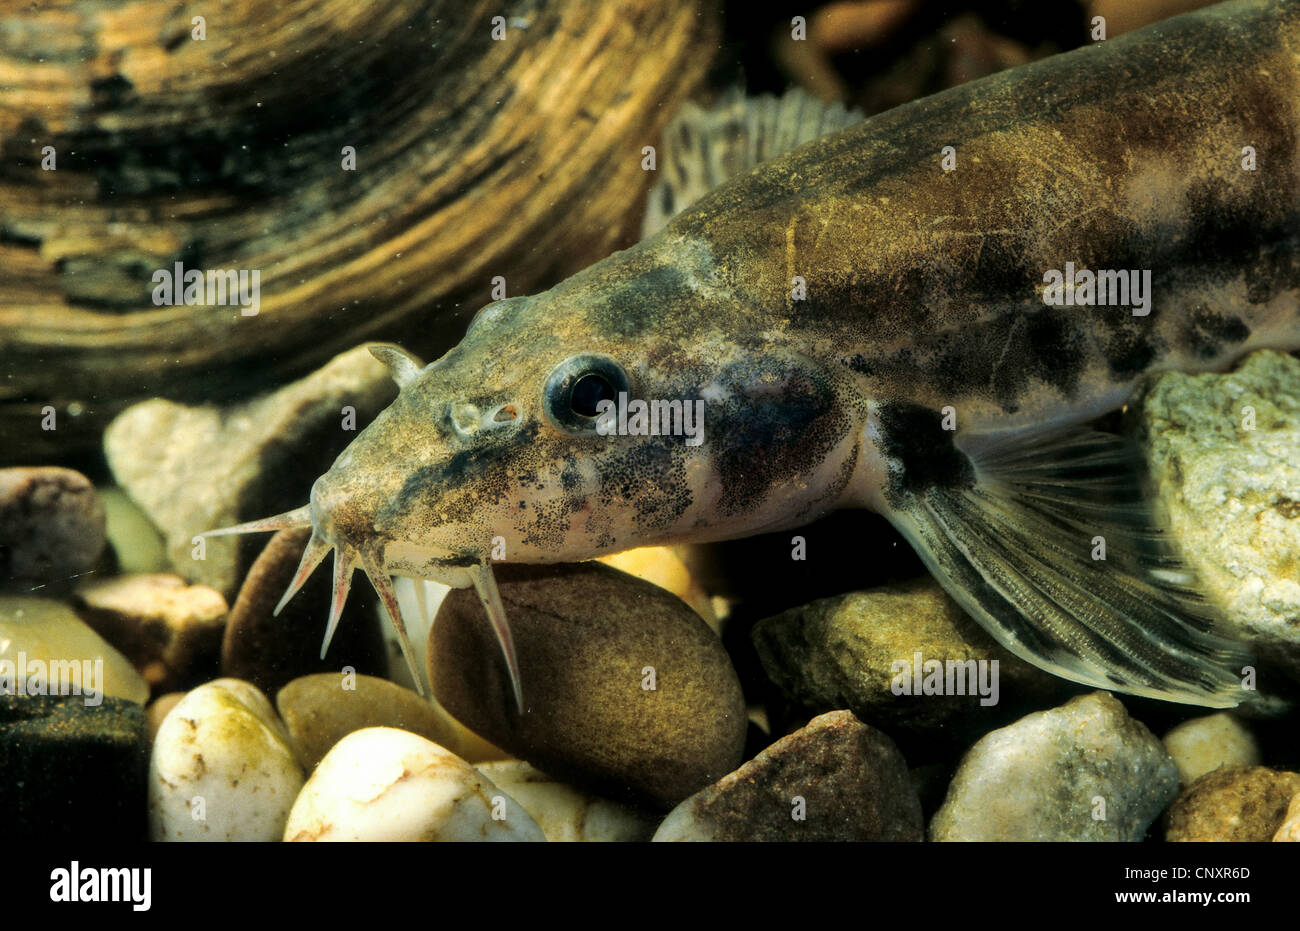 stone loach (Noemacheilus barbulatus, Barbatula barbatula, Nemacheilus barbatulus), swimming close to the pebble ground of a river, Germany Stock Photo